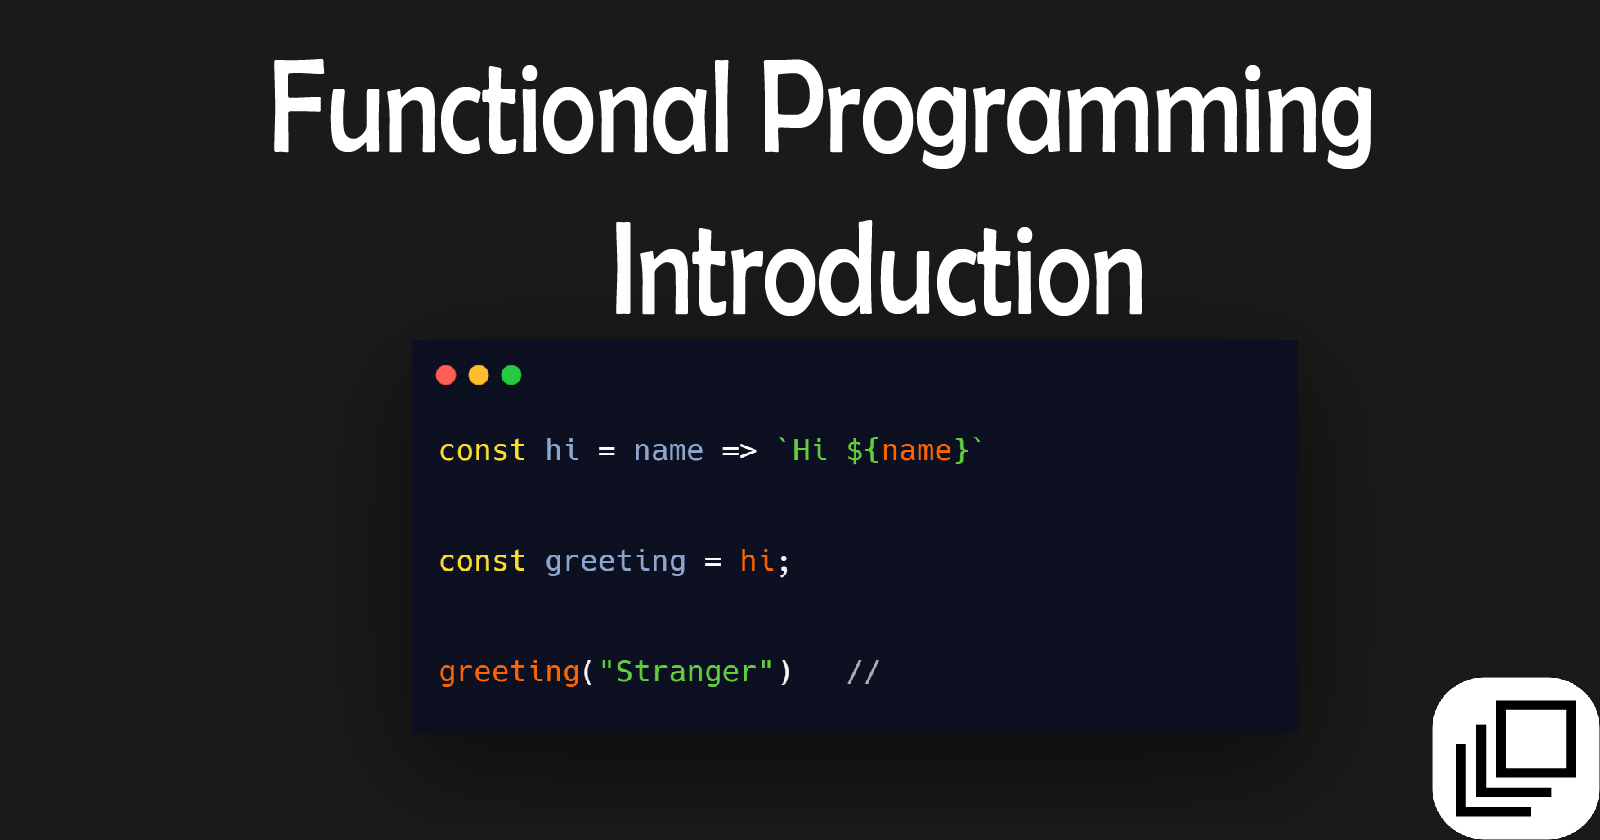 Functional Programming - Functions